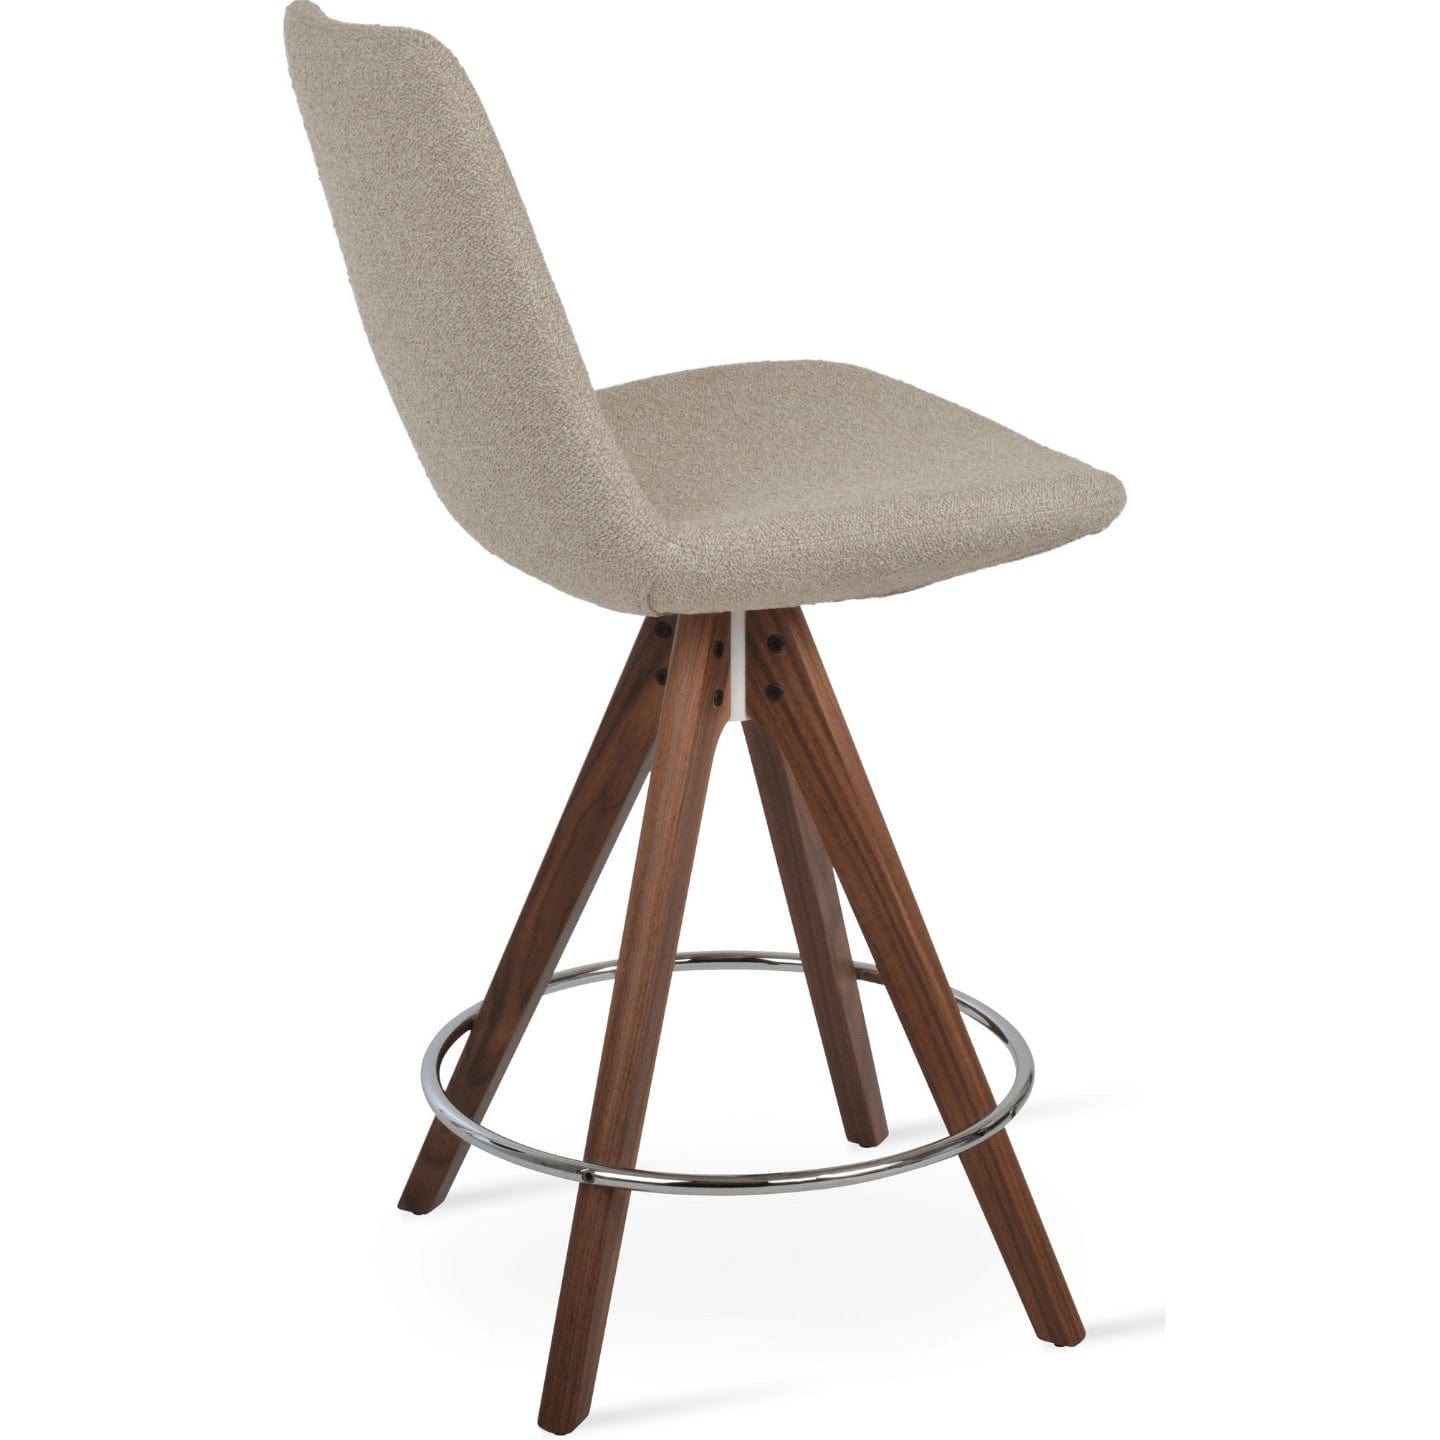 sohoConcept Table & Bar Stools Eiffel Chair Upholstered Boucle Seat | Pyramid Swivel Wood Base Barstools